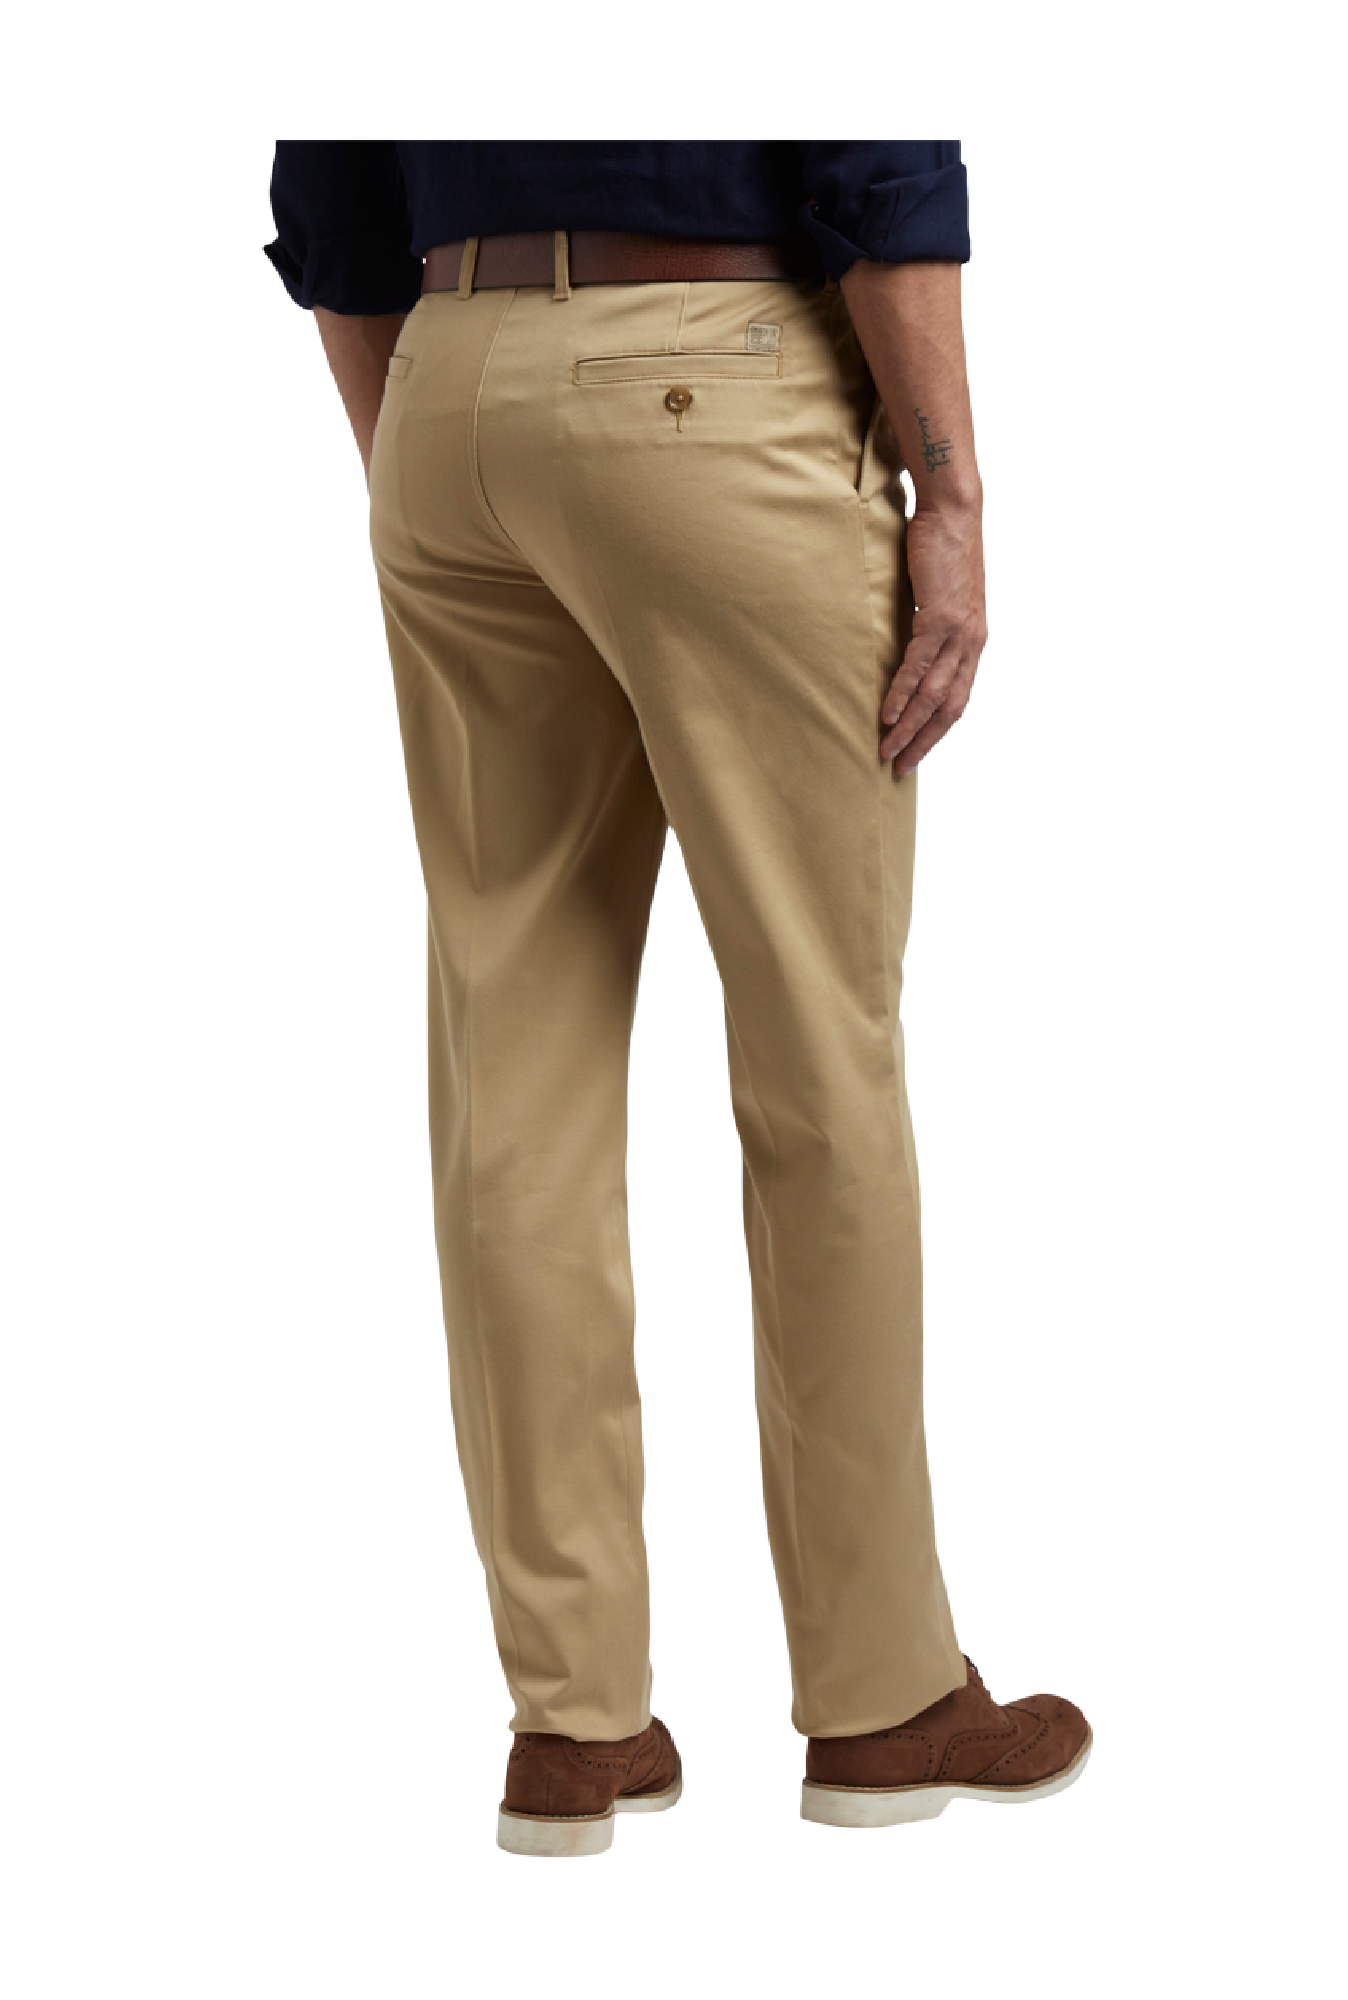 Buy Medium Blue Trousers  Pants for Men by Colorplus Online  Ajiocom